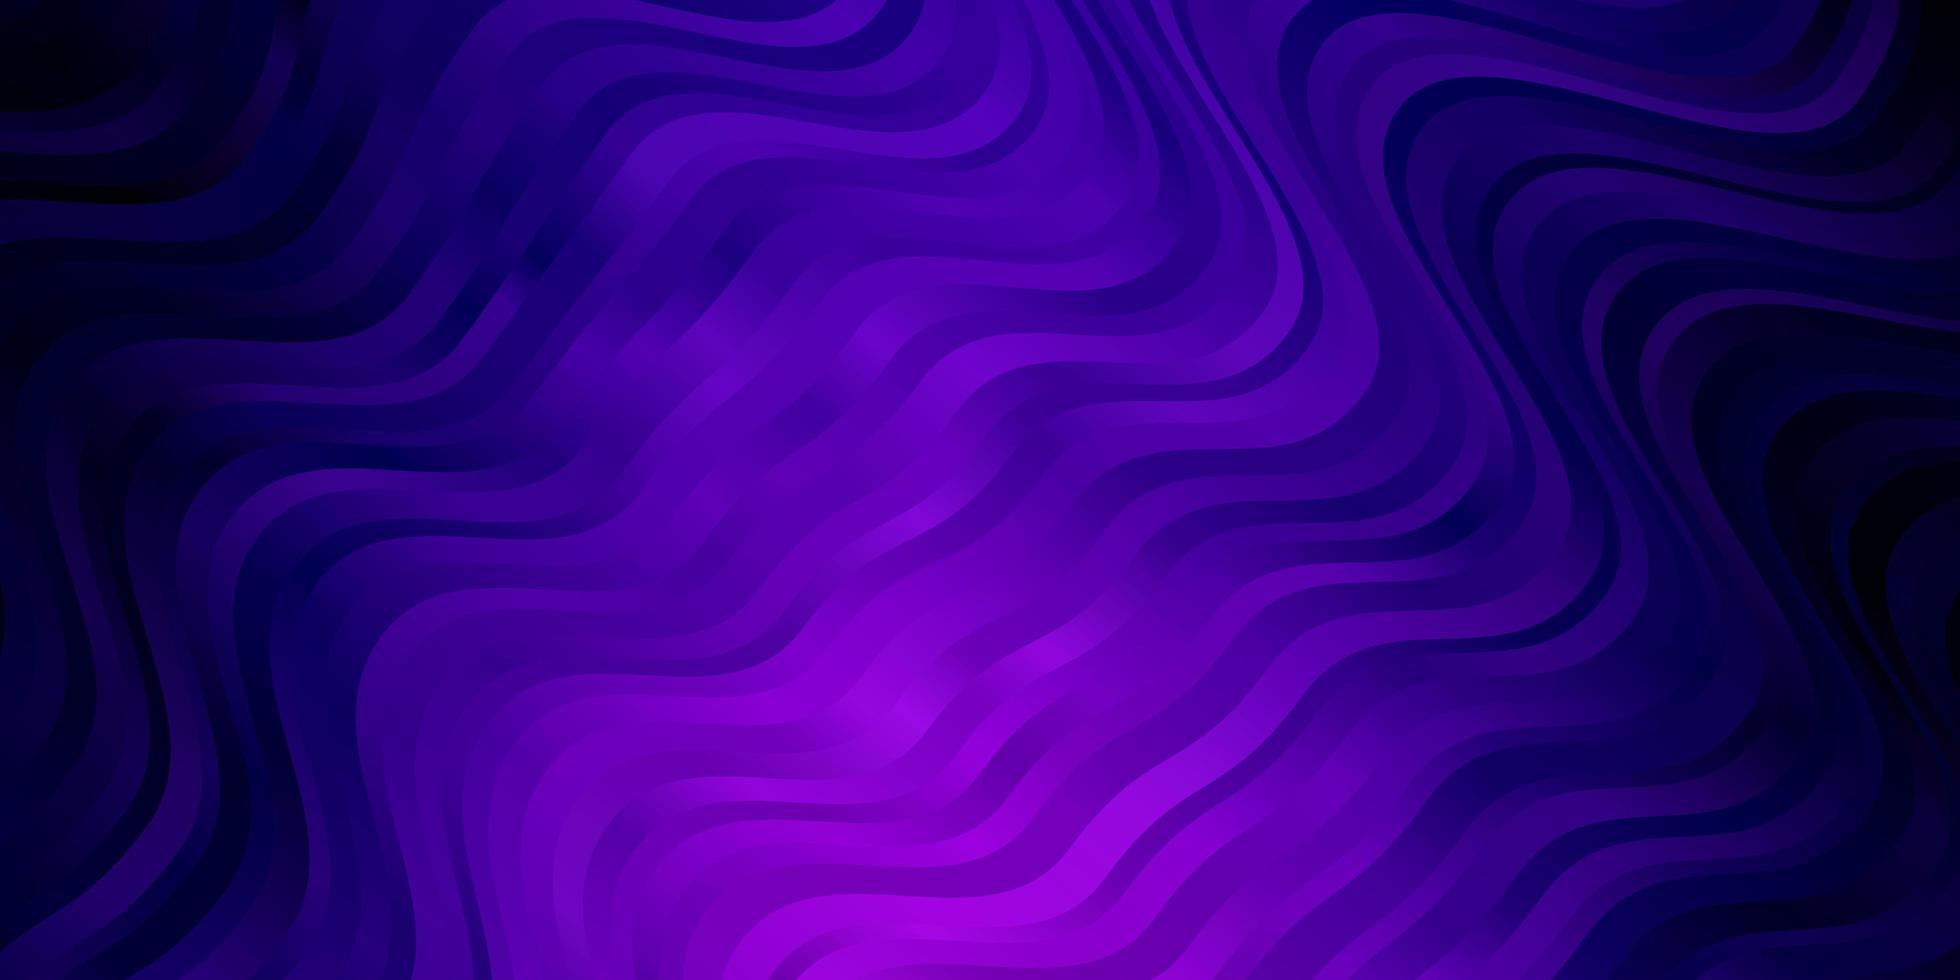 diseño de vector de color púrpura claro con ilustración abstracta de arco circular con plantilla de arcos degradados para teléfonos móviles